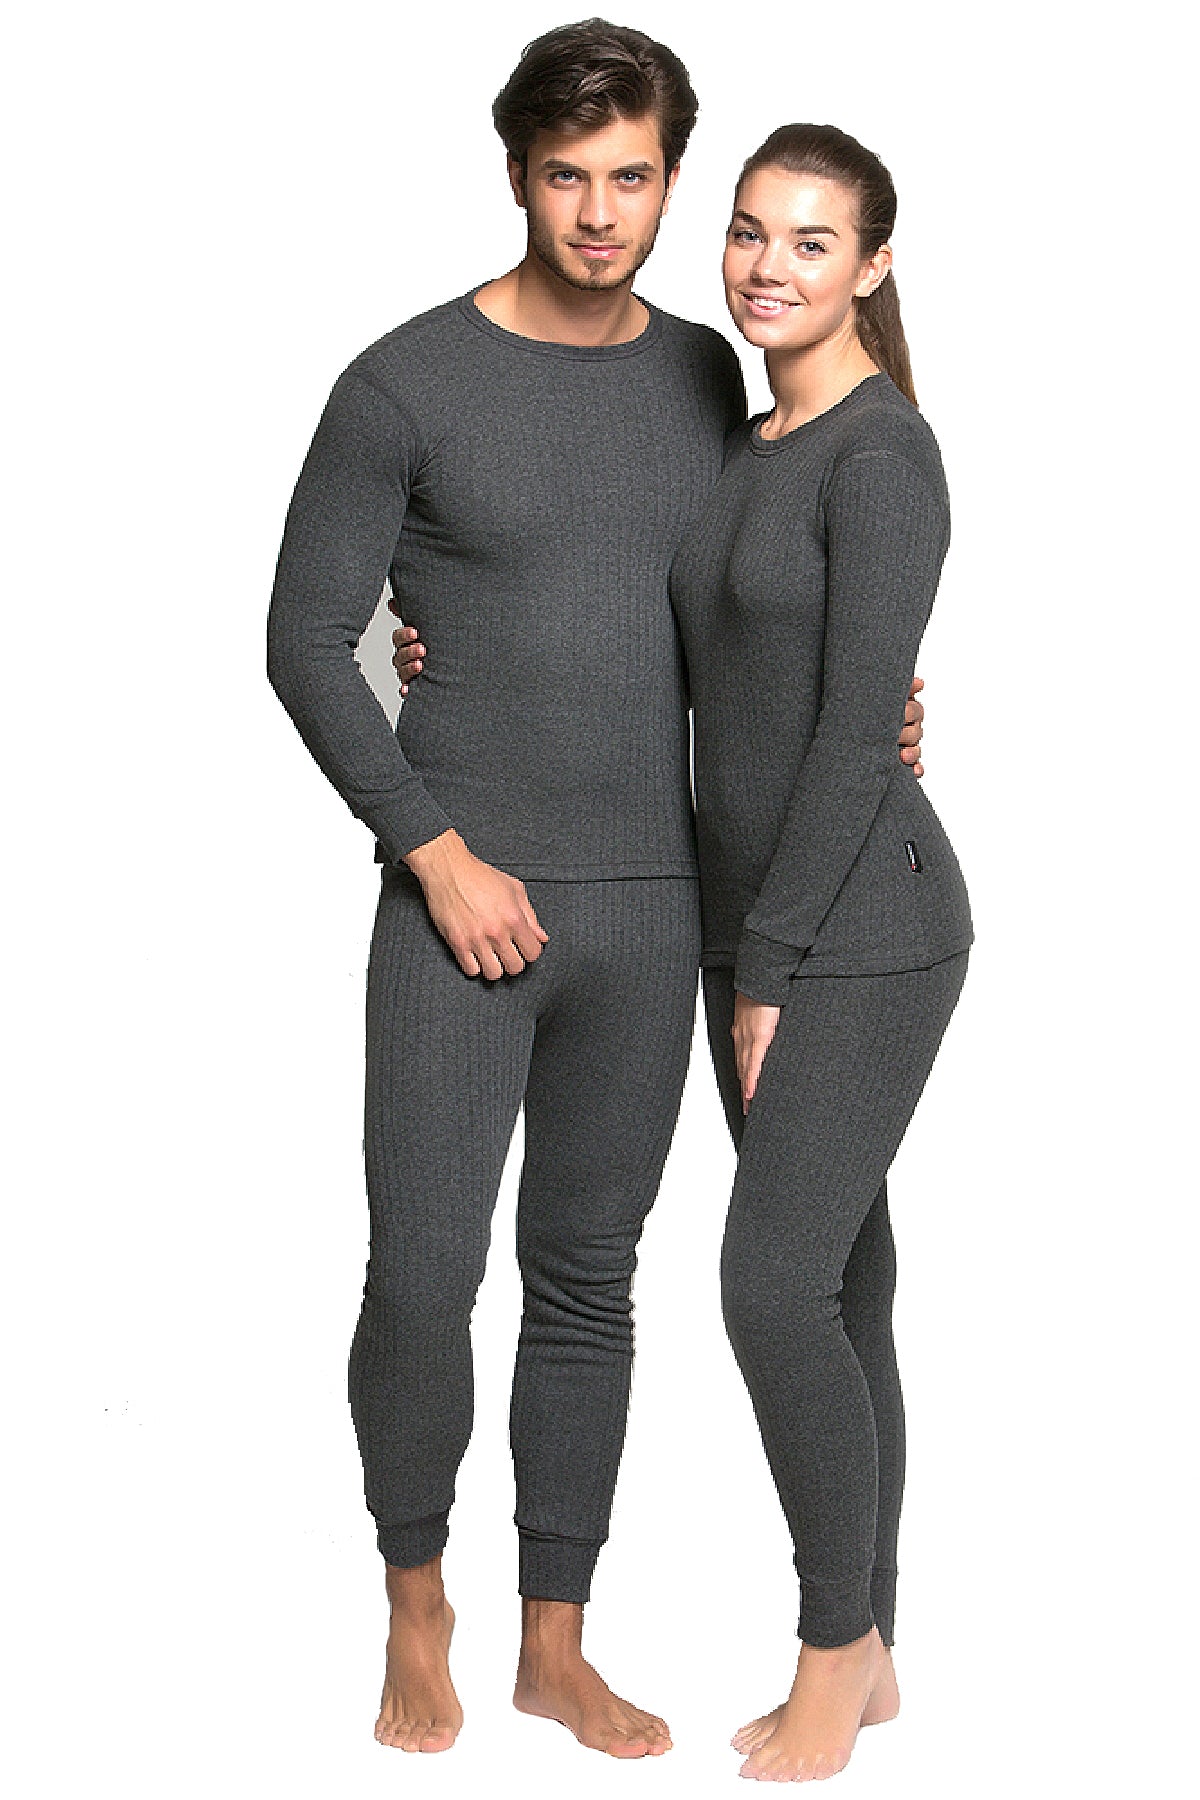 Wholesale Thermal Underwear Unisex Sets for Men & Women Soft Fleece Style - Grey